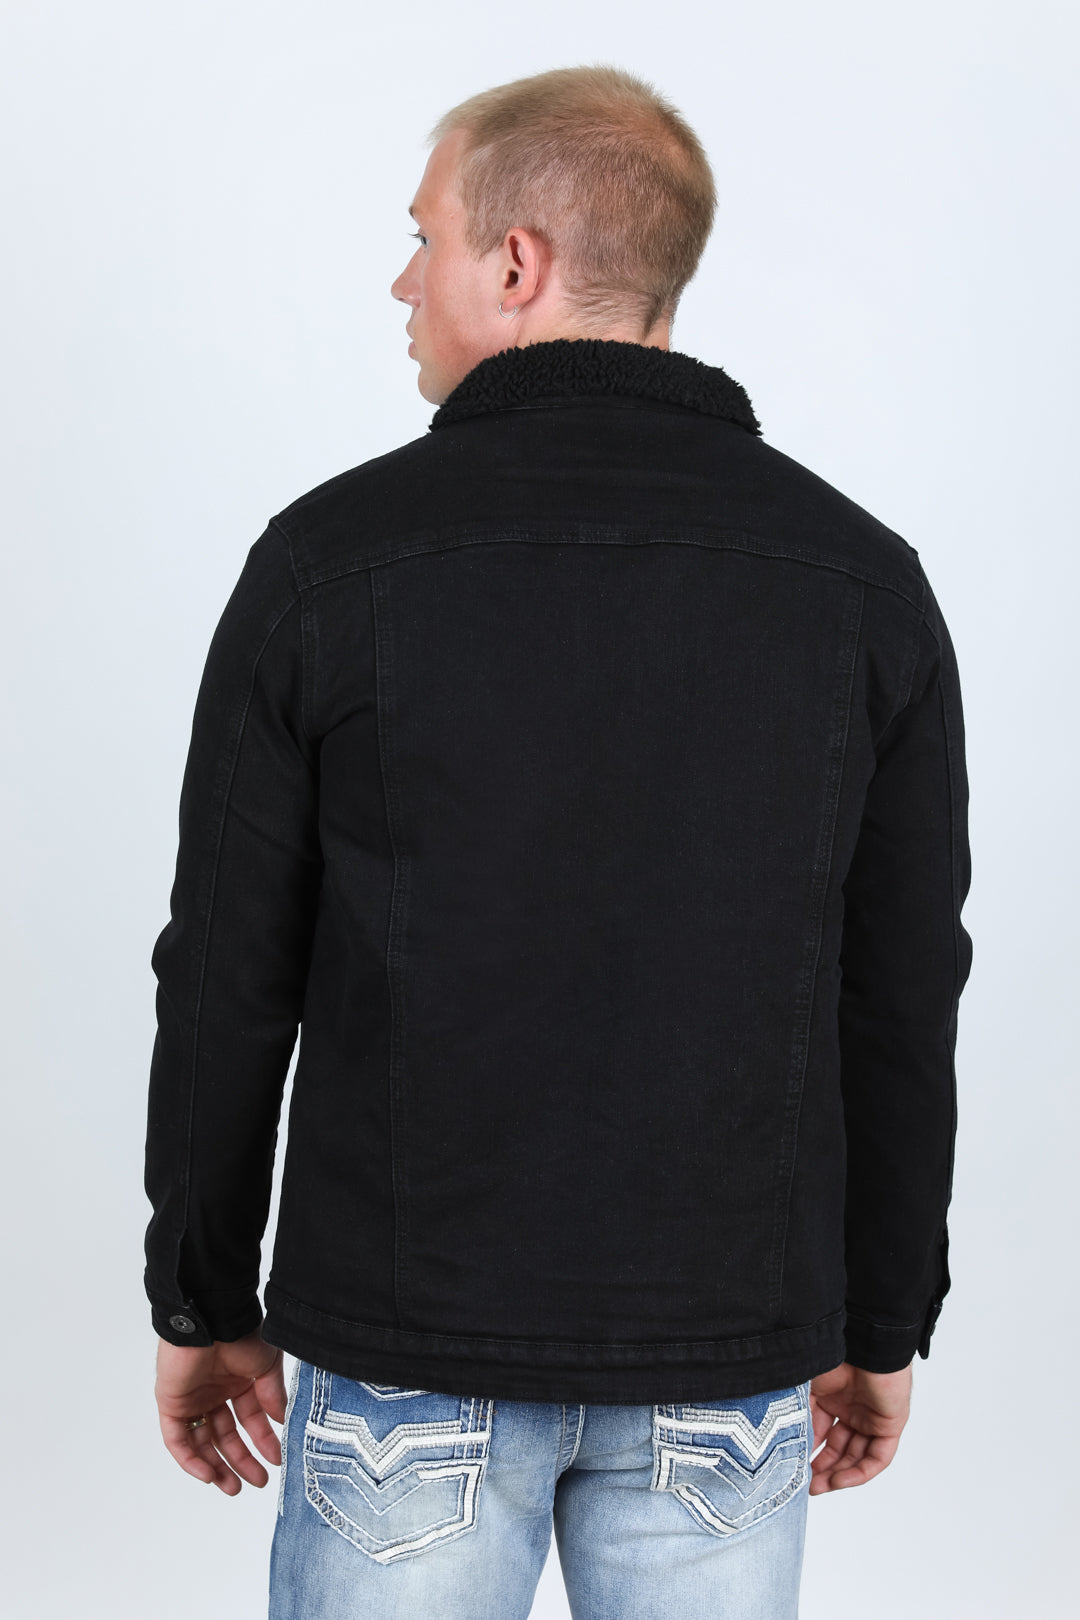 60% OFF on Roadster Men Black Washed Detachable Hood Denim Jacket on Myntra  | PaisaWapas.com